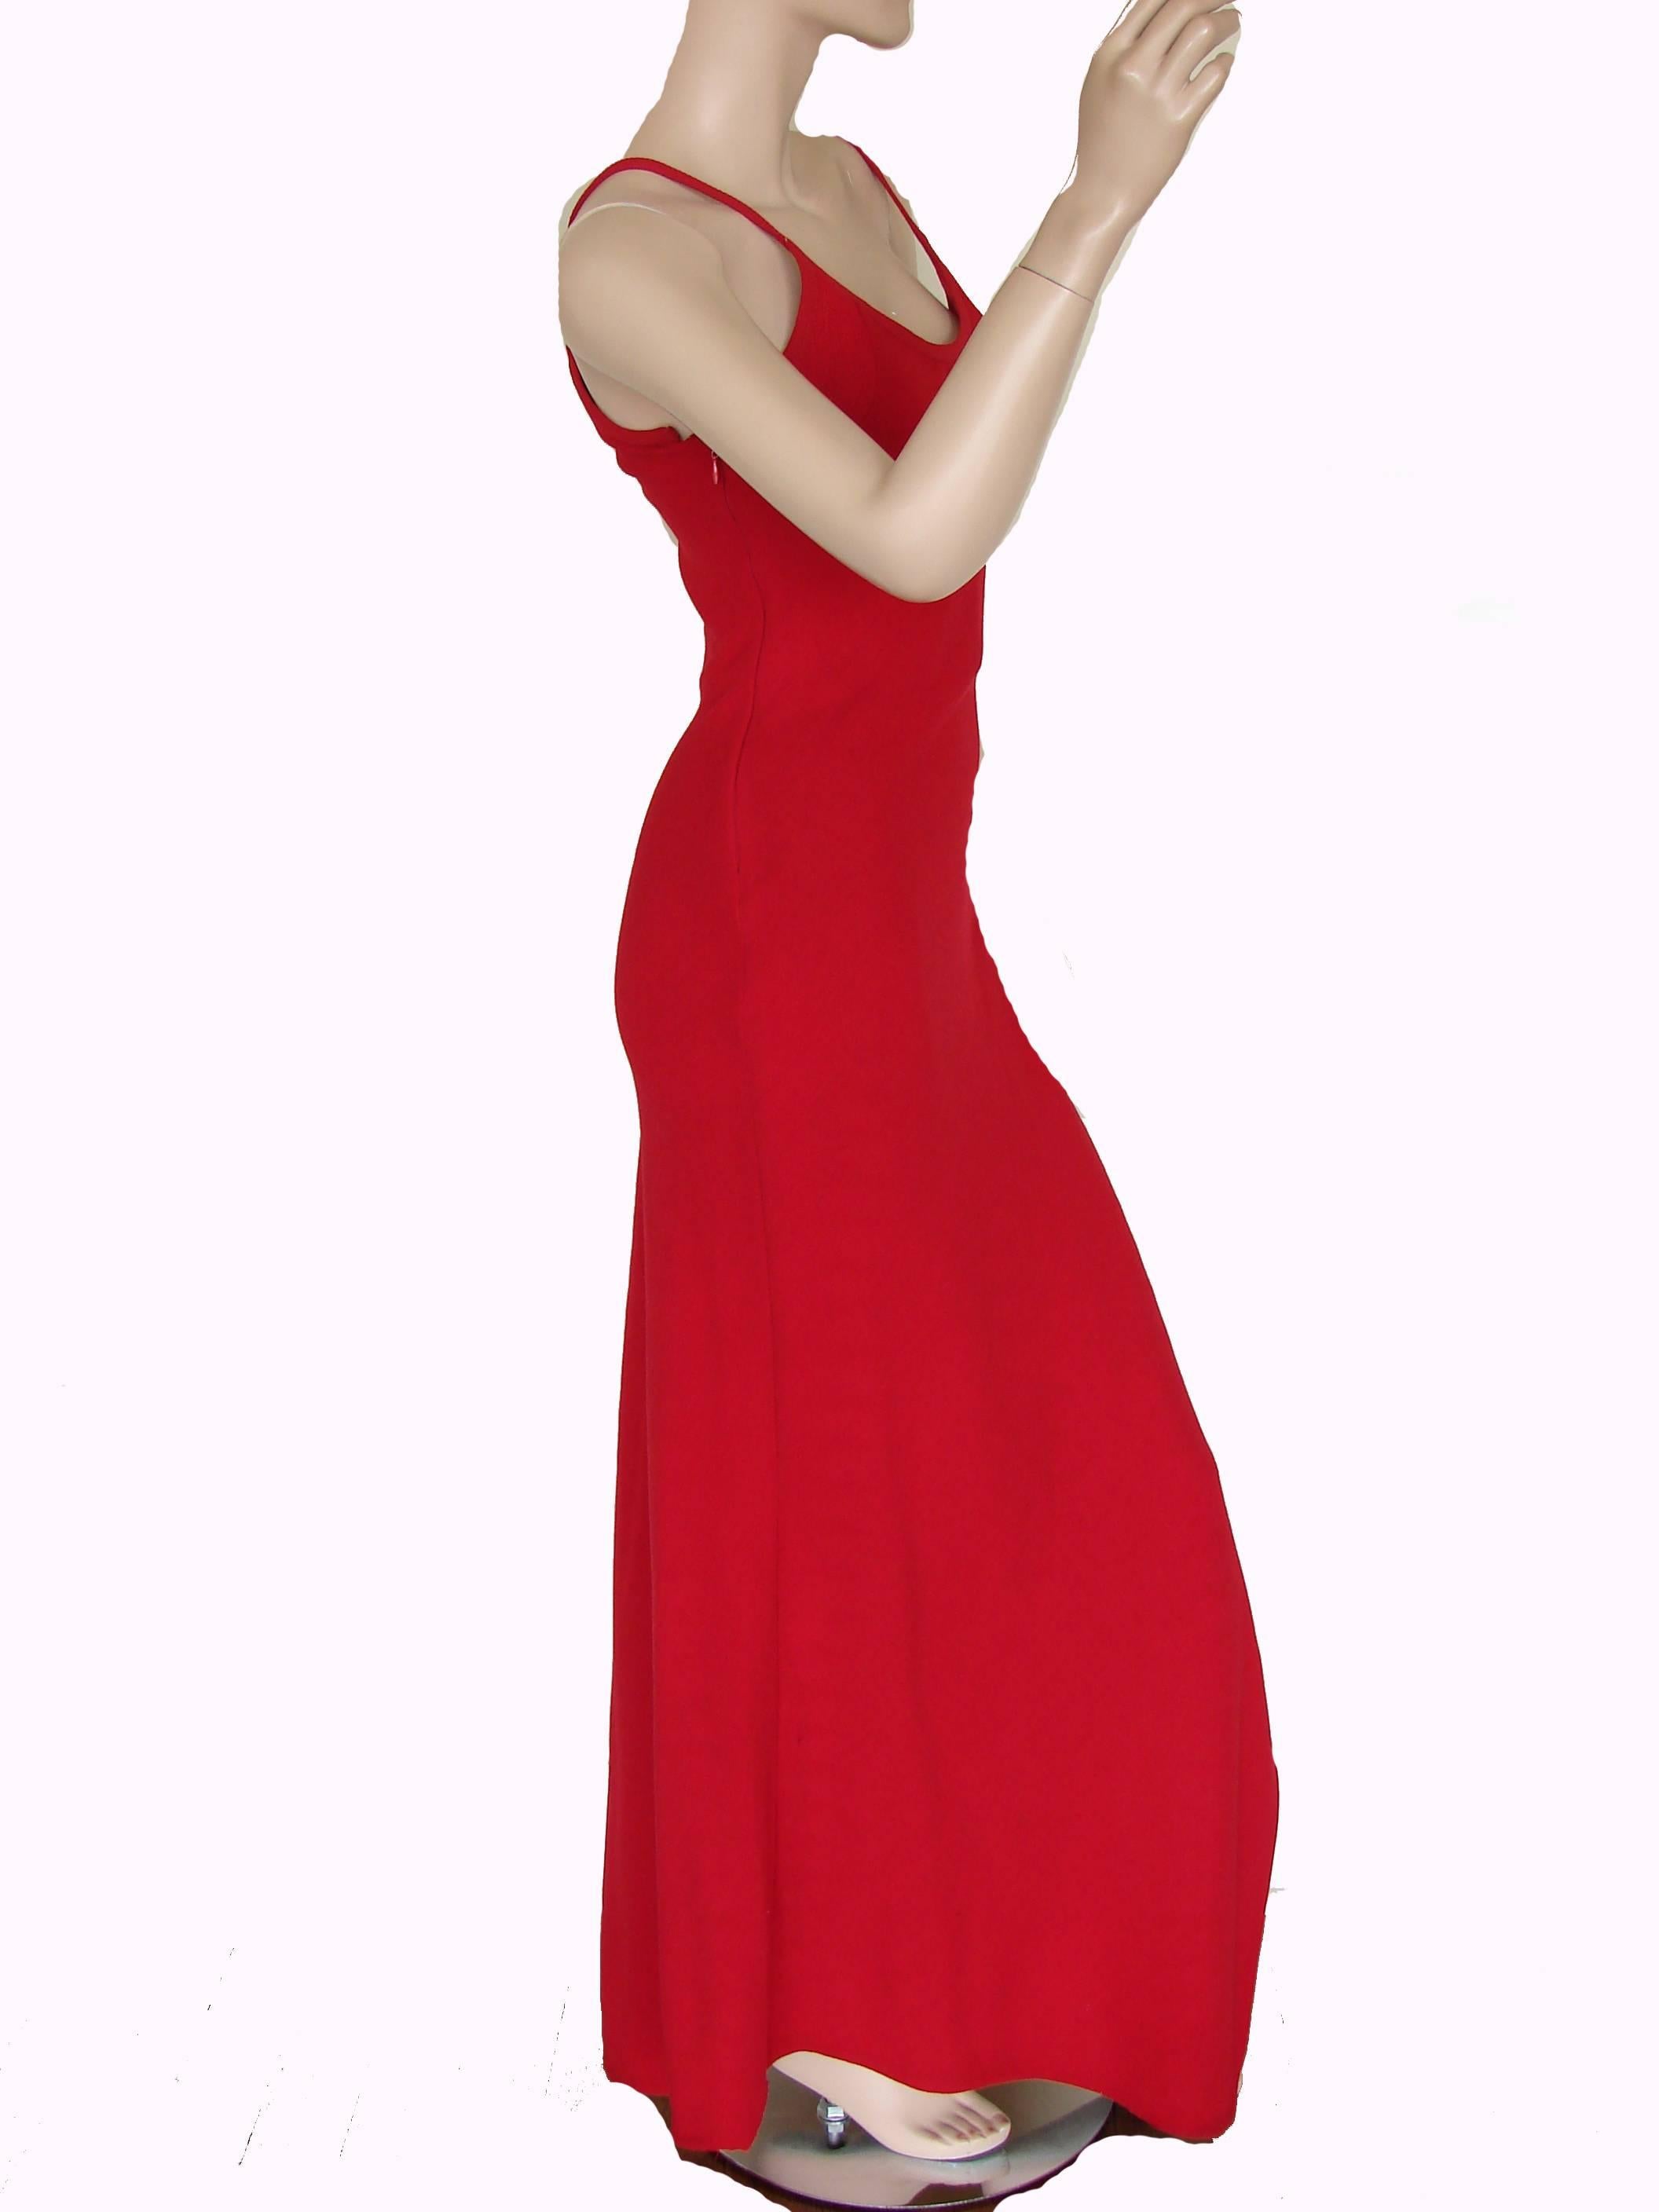 Women's Gianni Versace Couture Red Bustier Dress Long Asymmetric Hem 1990s Sz S/M